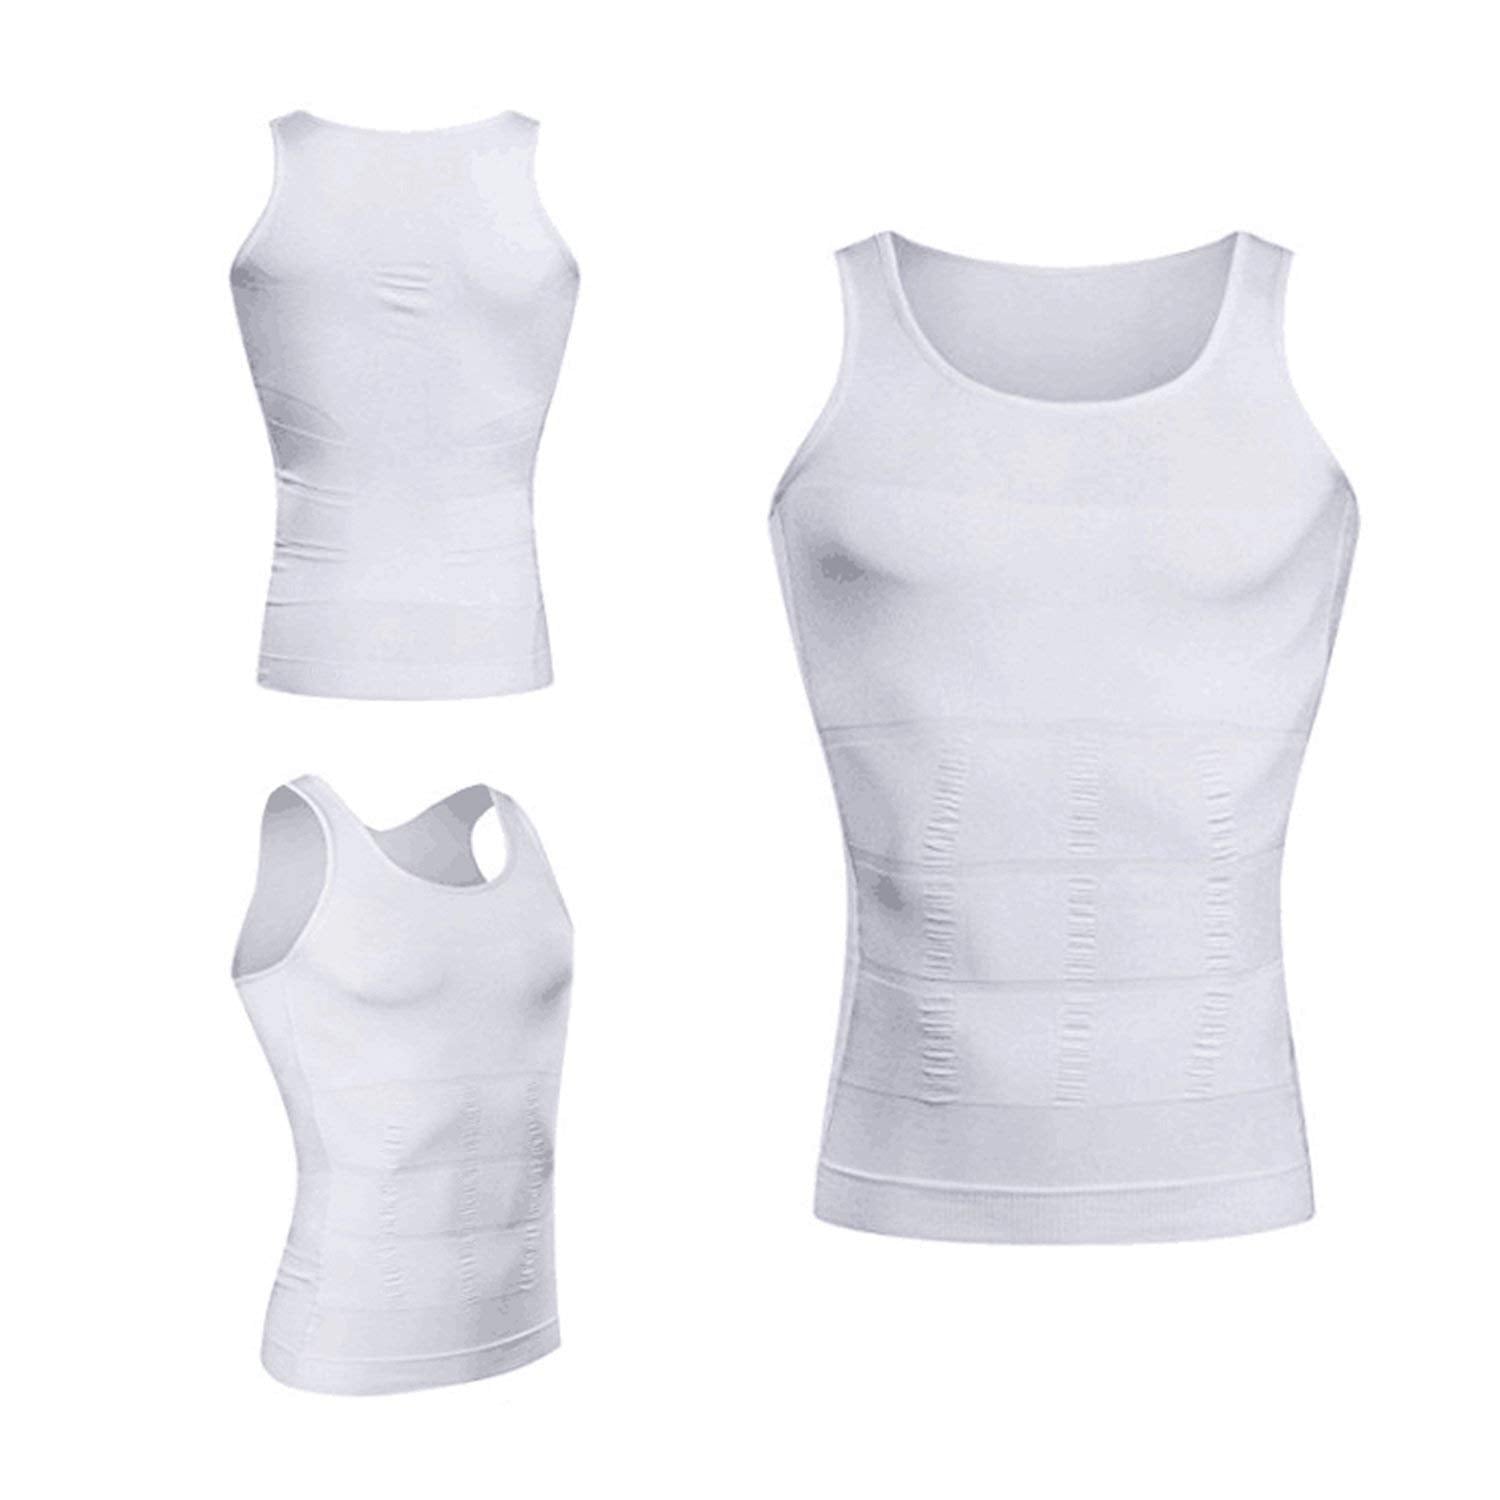 Buy Cheap Mens Slimming Body Shaper Vest Shirt +Free Shipping - Slliim